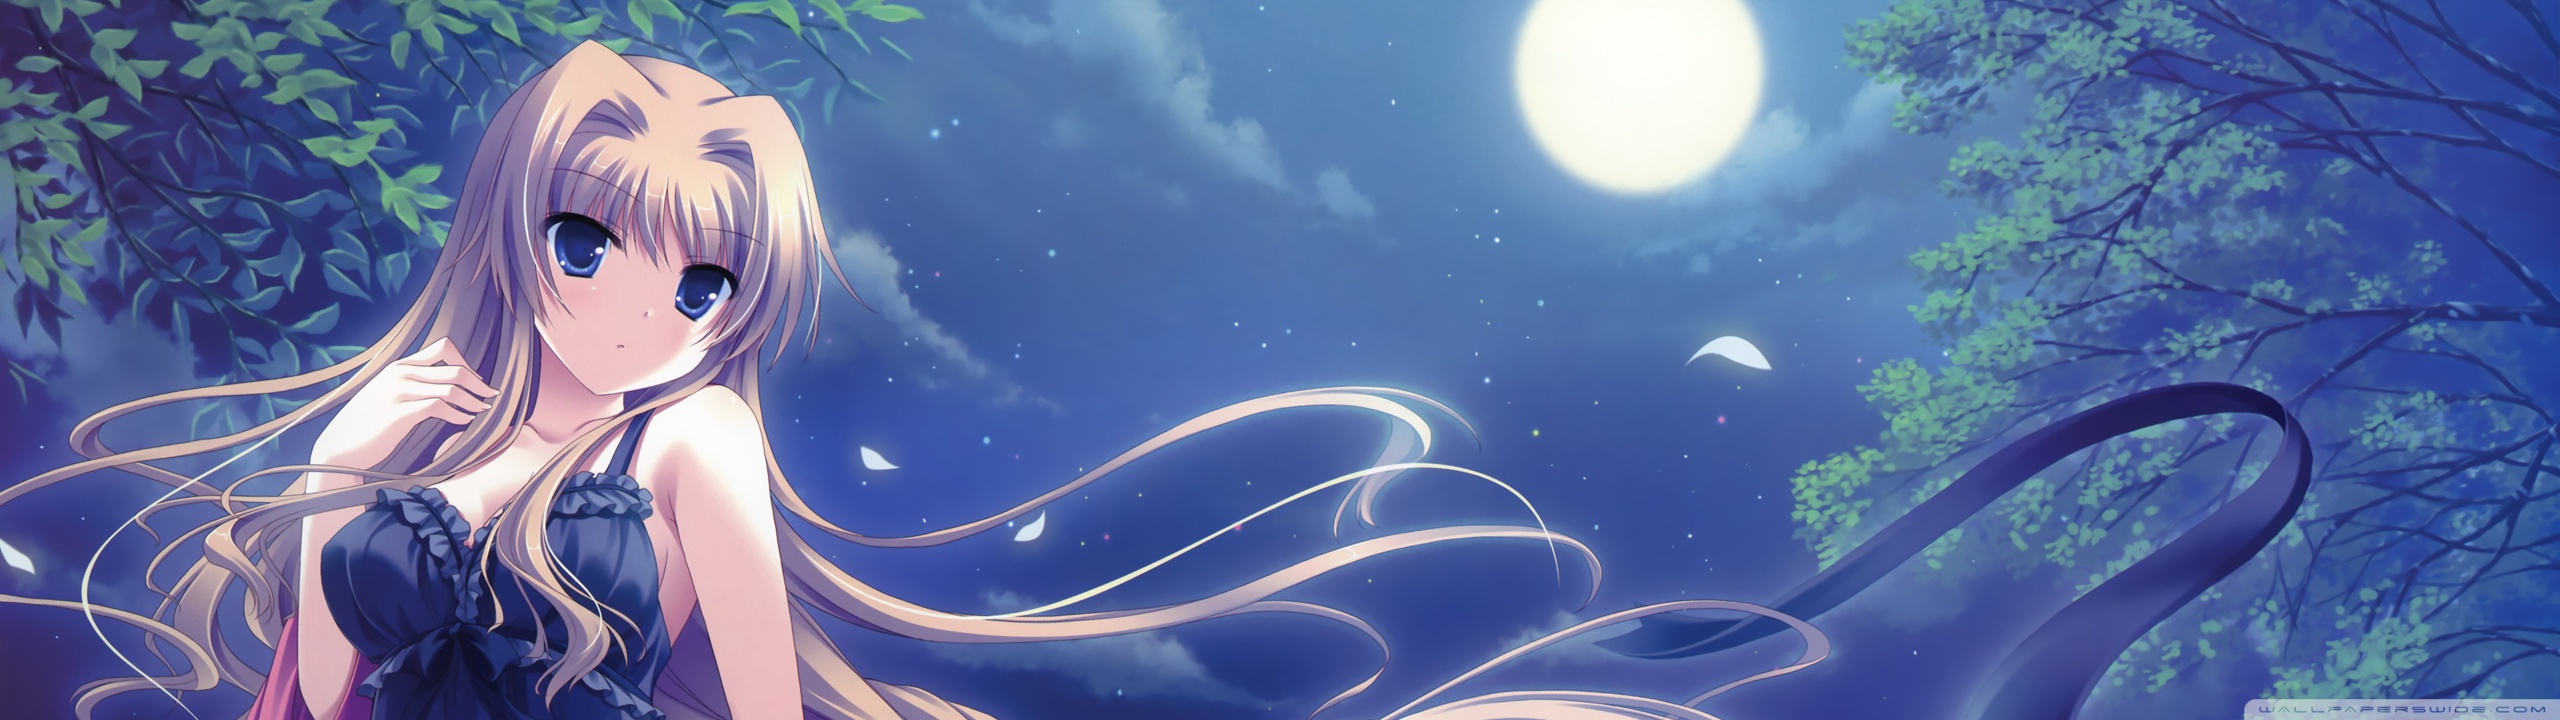 Anime Girl Dual Screen - HD Wallpaper 